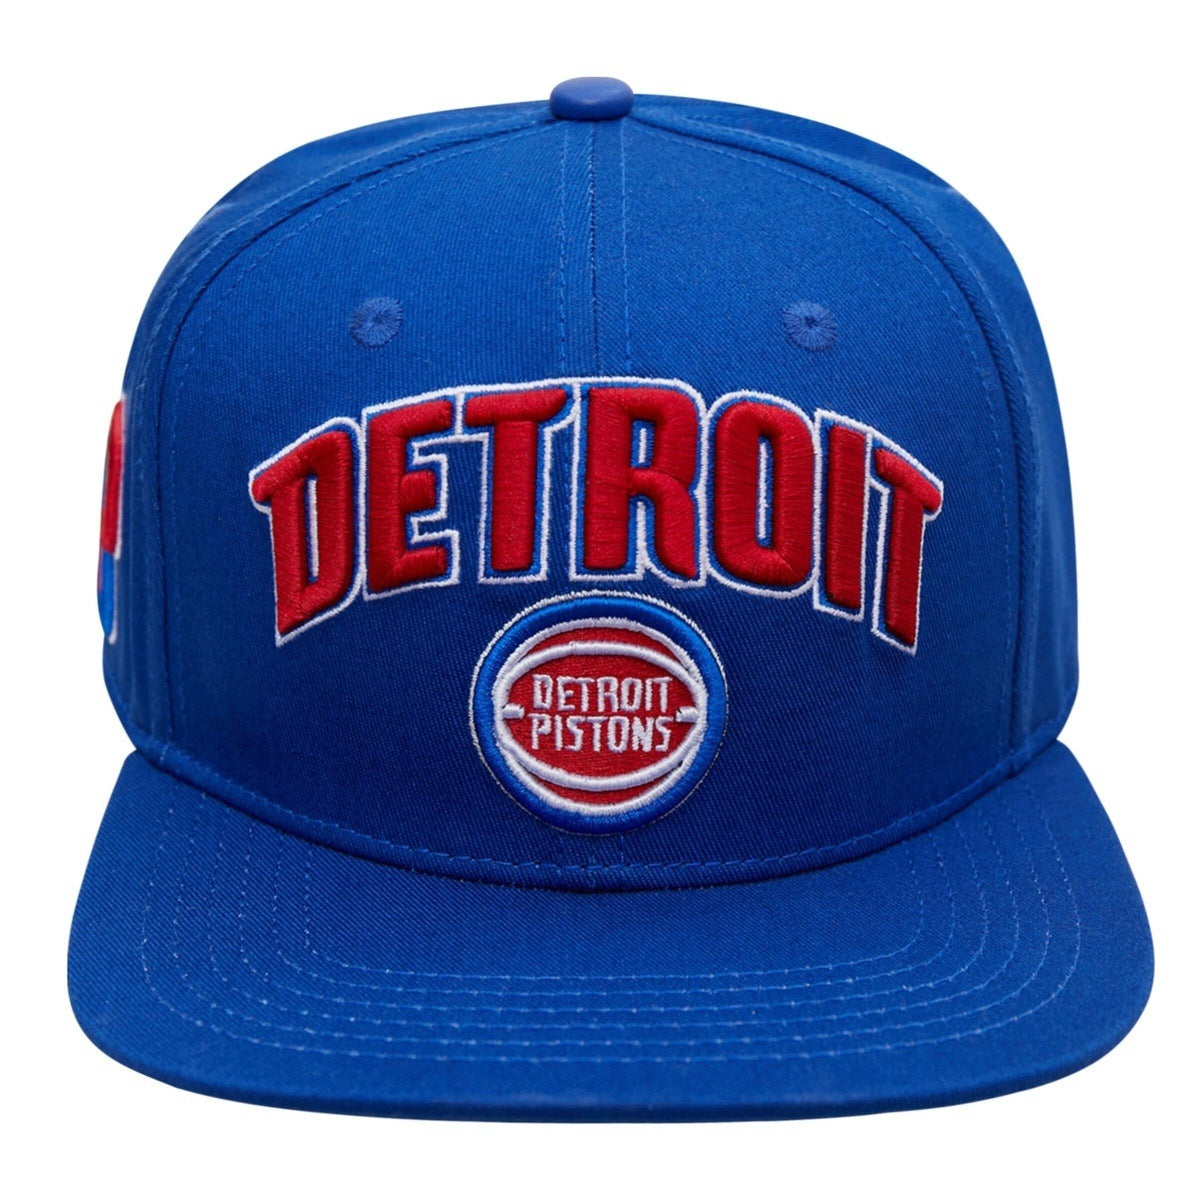 Shop Pro Standard Detroit Pistons Retro Classic Tee BDP156062-ERB